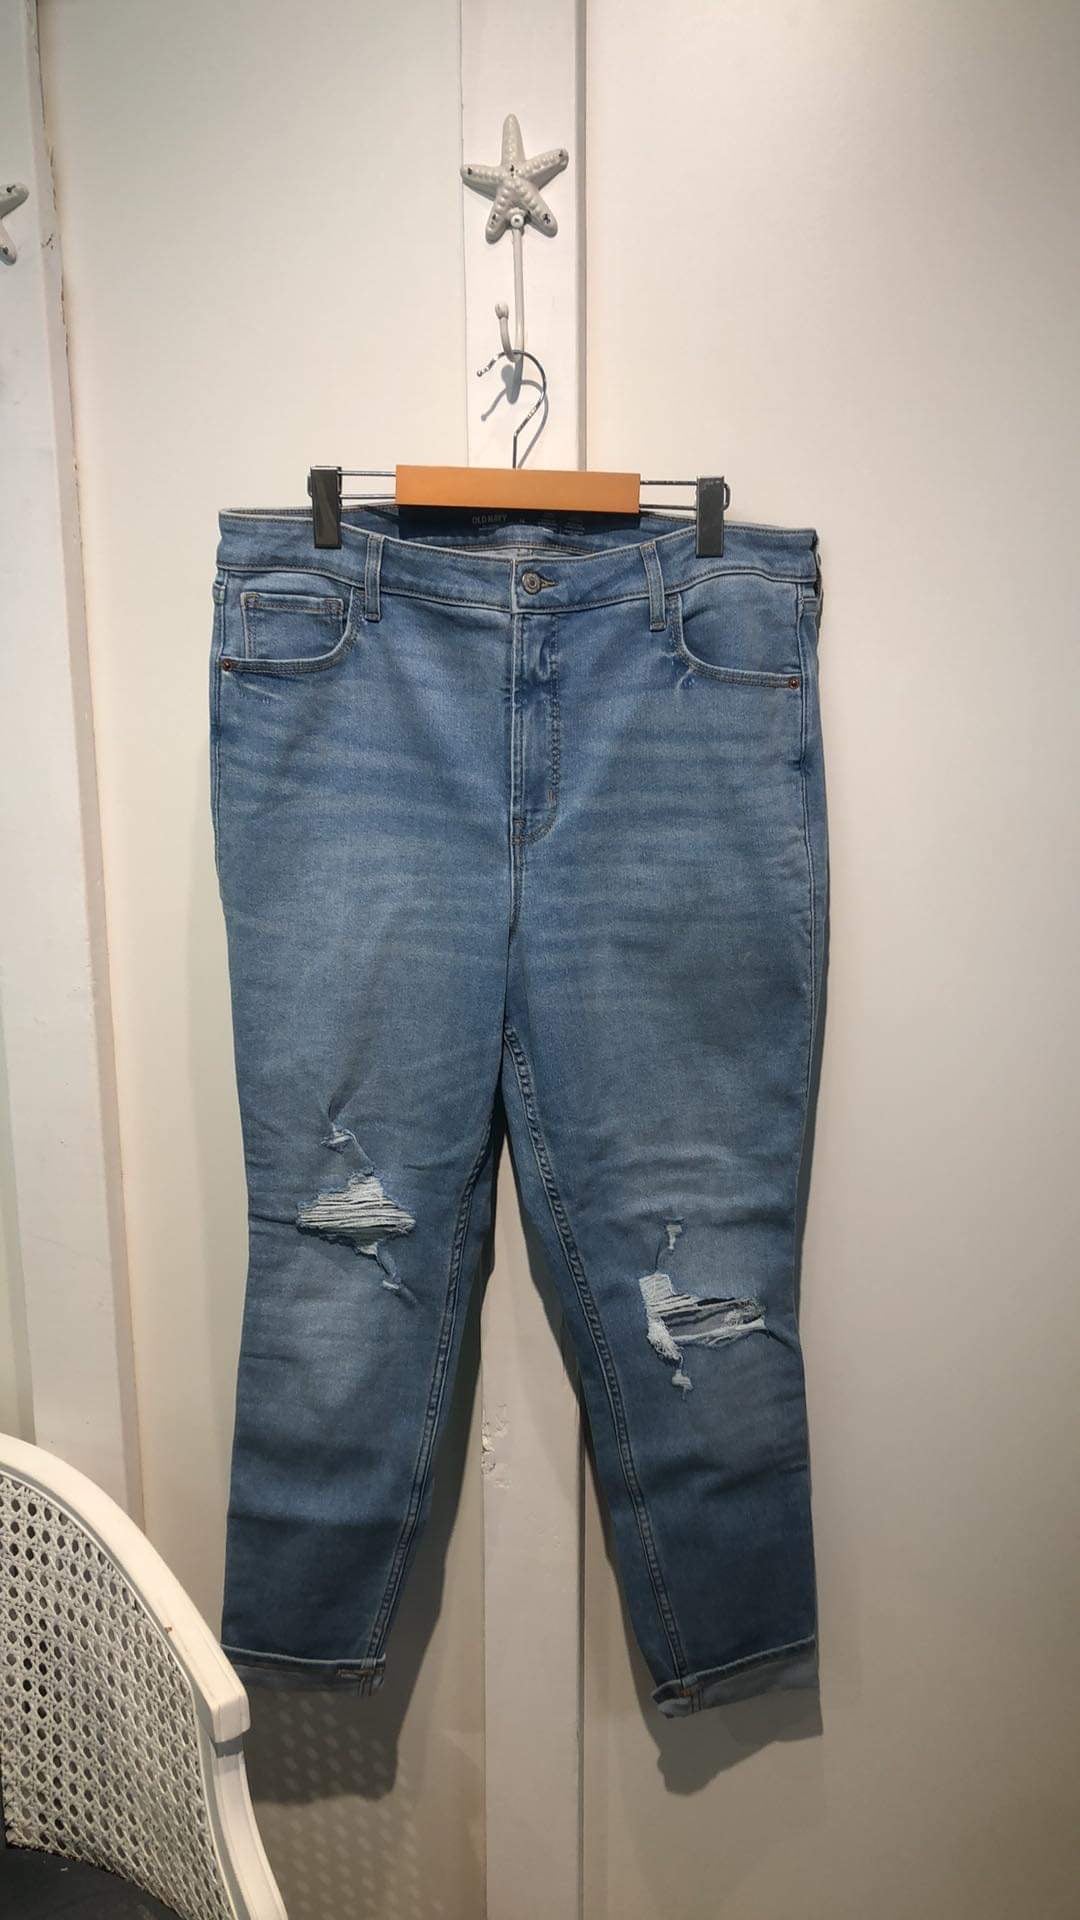 Distressed Skinny jeans